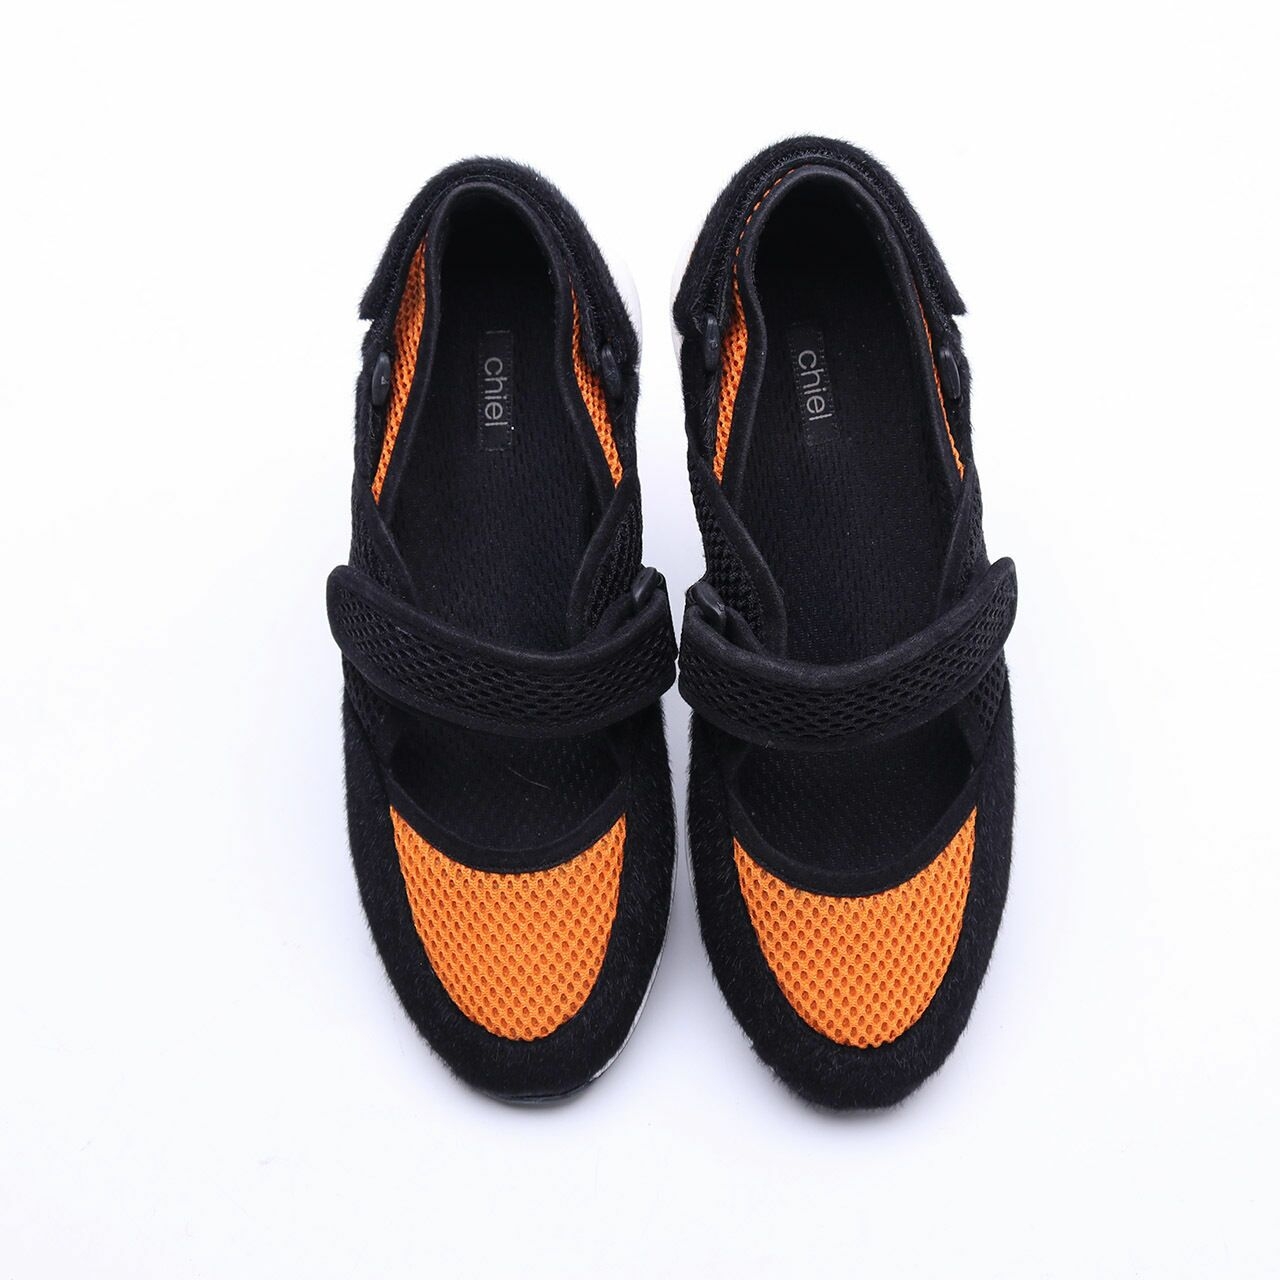 Chiel Black & Orange Sneakers